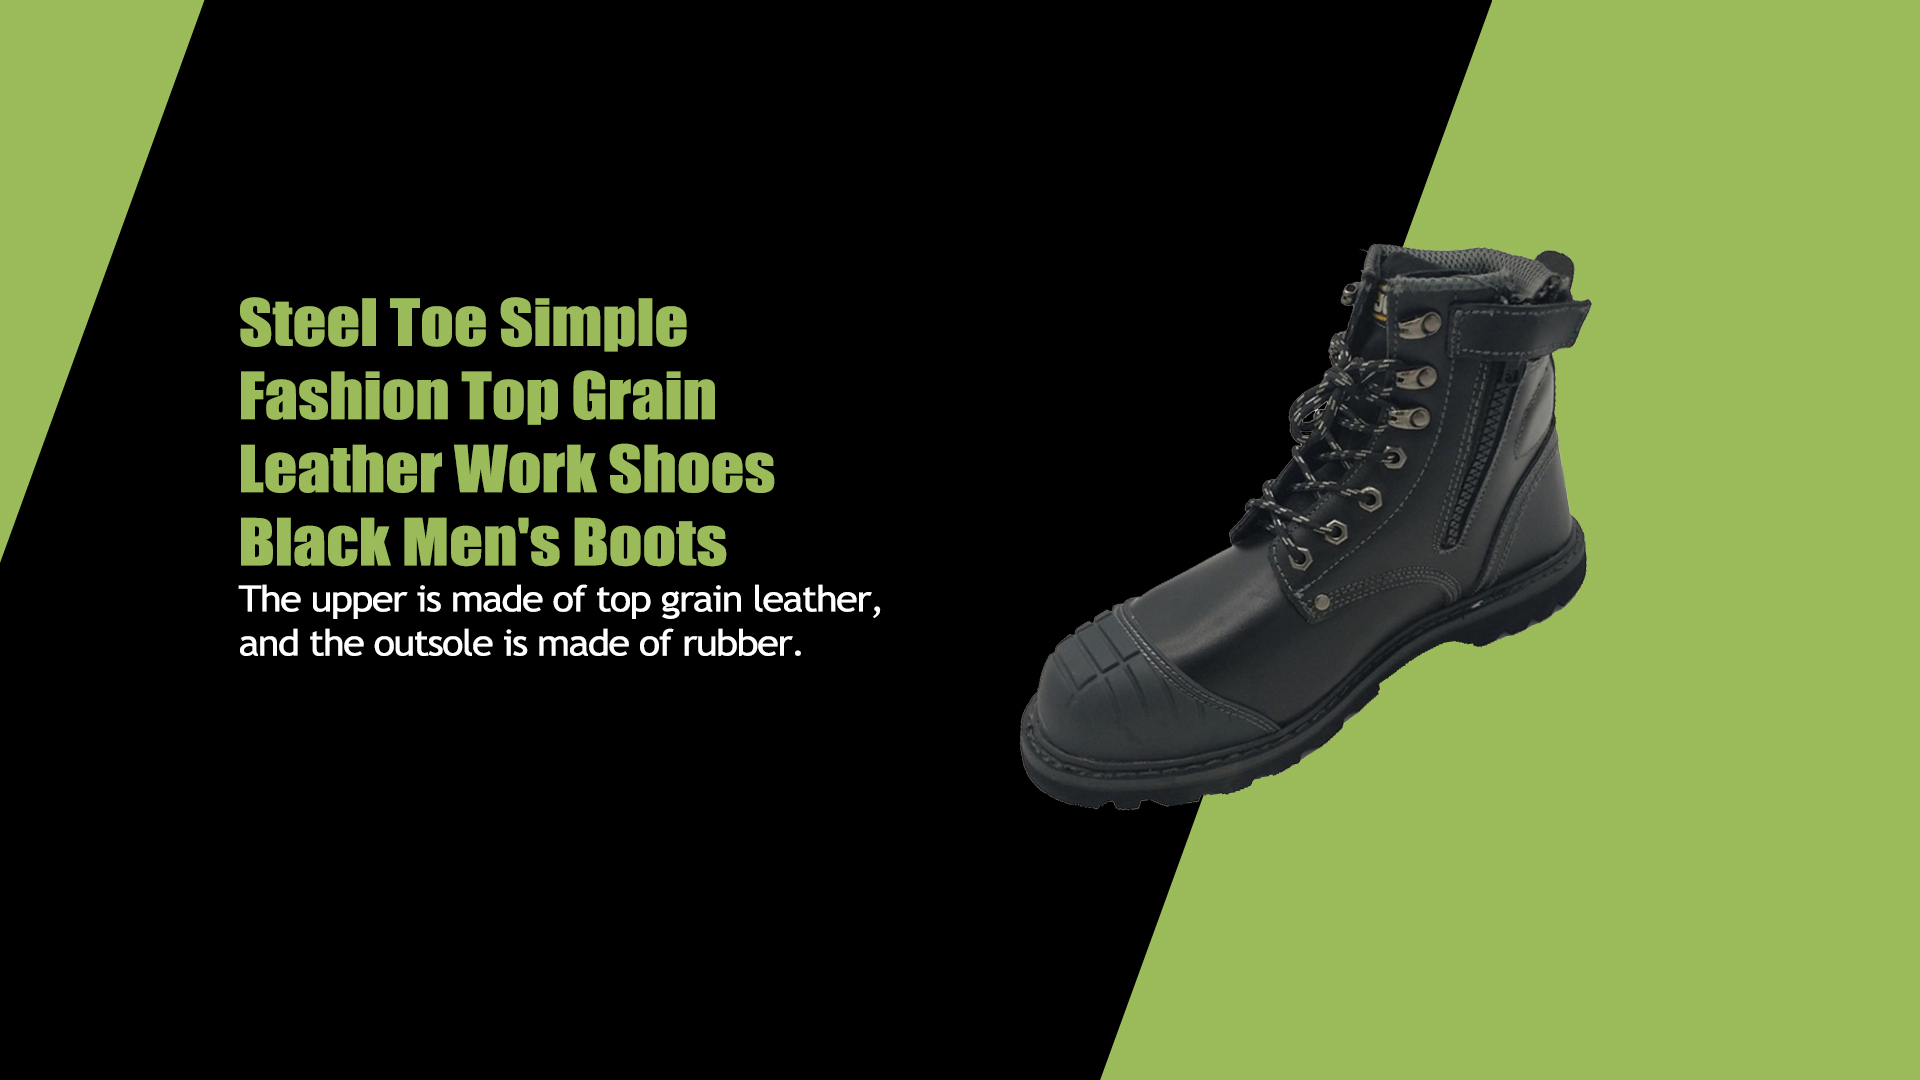 Steel Toe Simple Fashion Top Grain Leather Work Shoes Sepatu Bot Pria Hitam